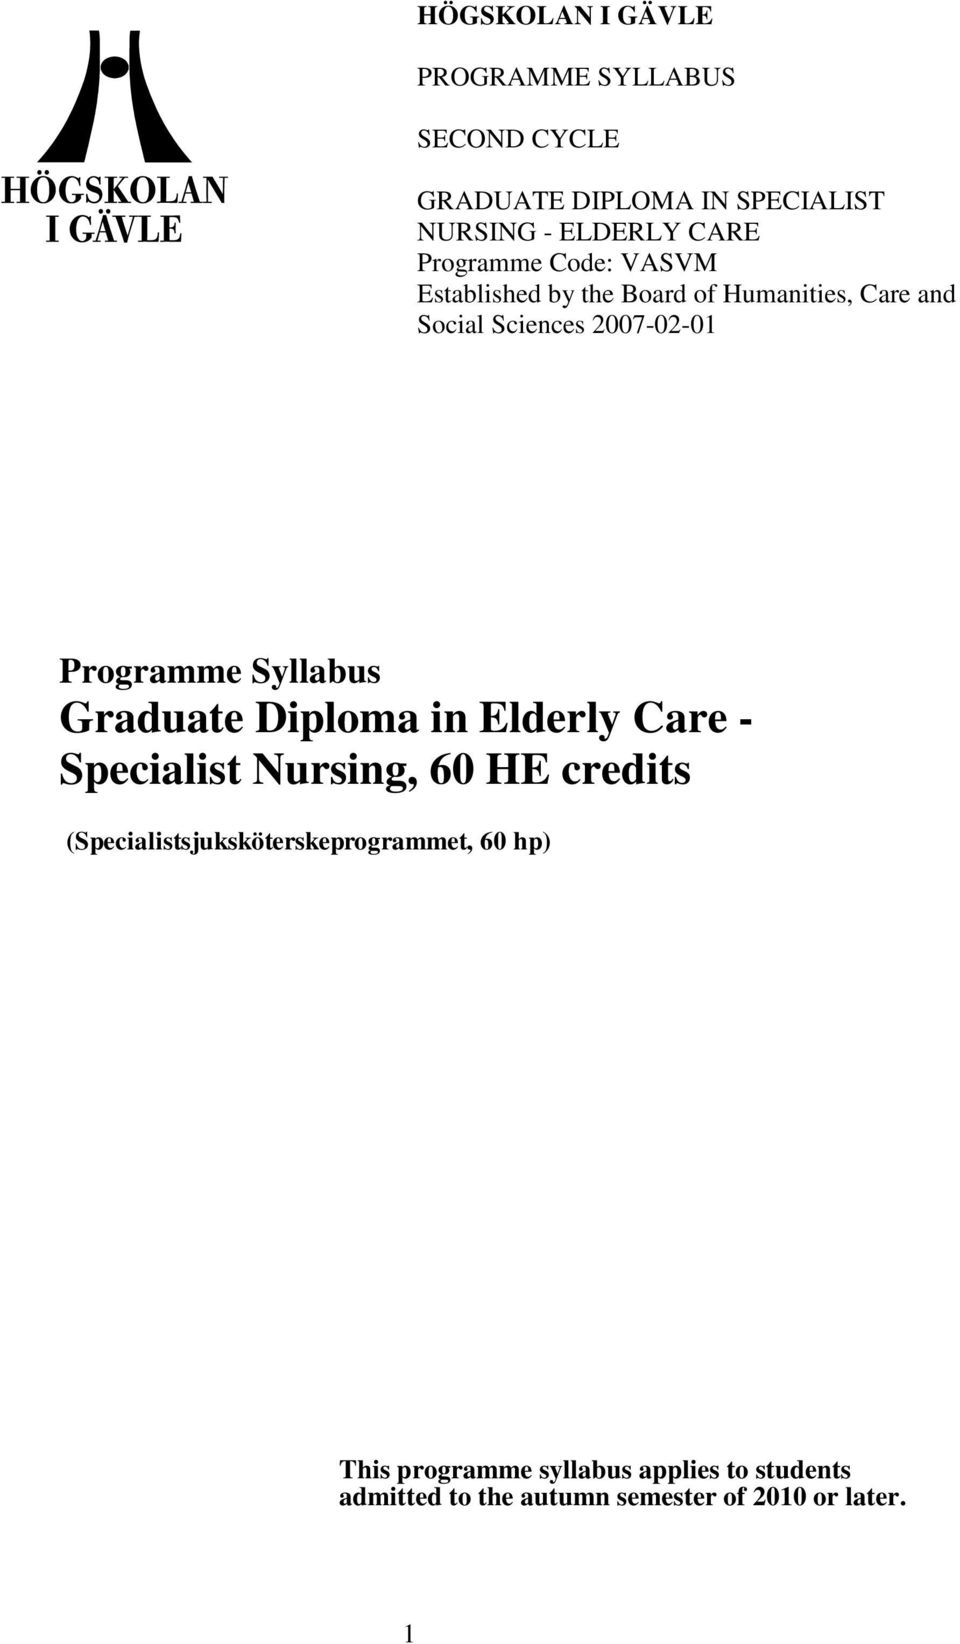 Programme Syllabus Graduate Diploma in Elderly Care - Specialist Nursing, 60 HE credits